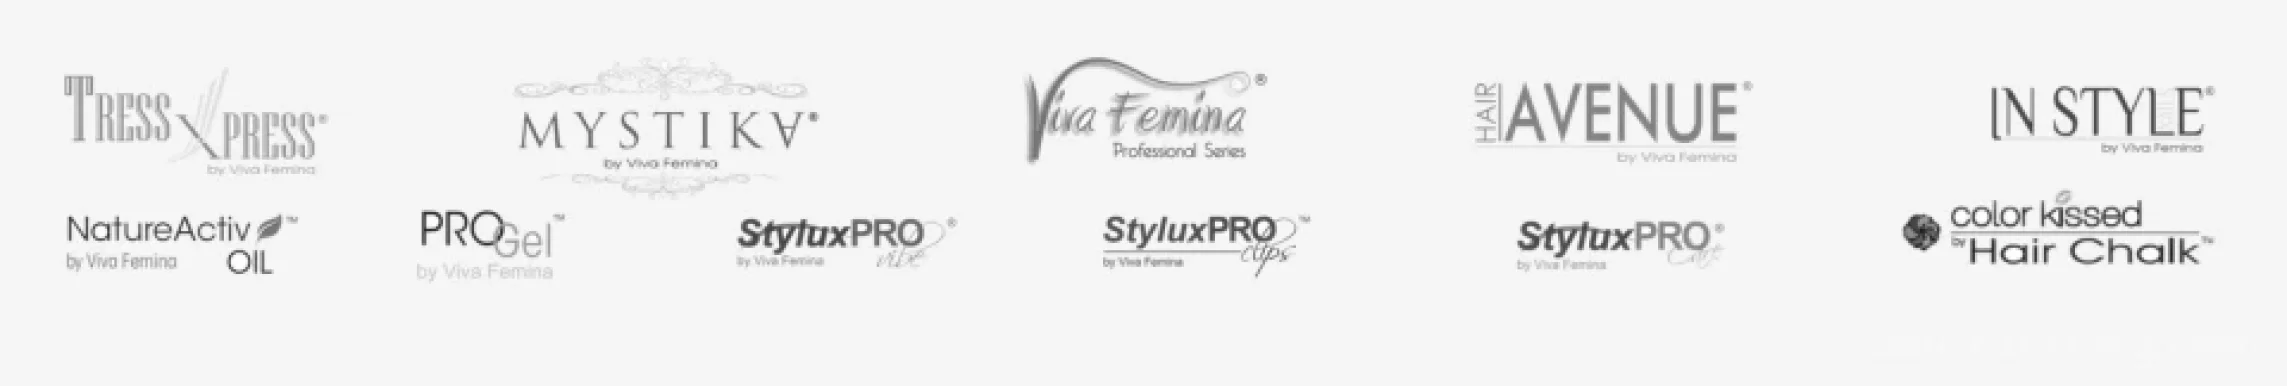 Viva Femina Hair Extensions & Beauty Salon, Chicago - Photo 1